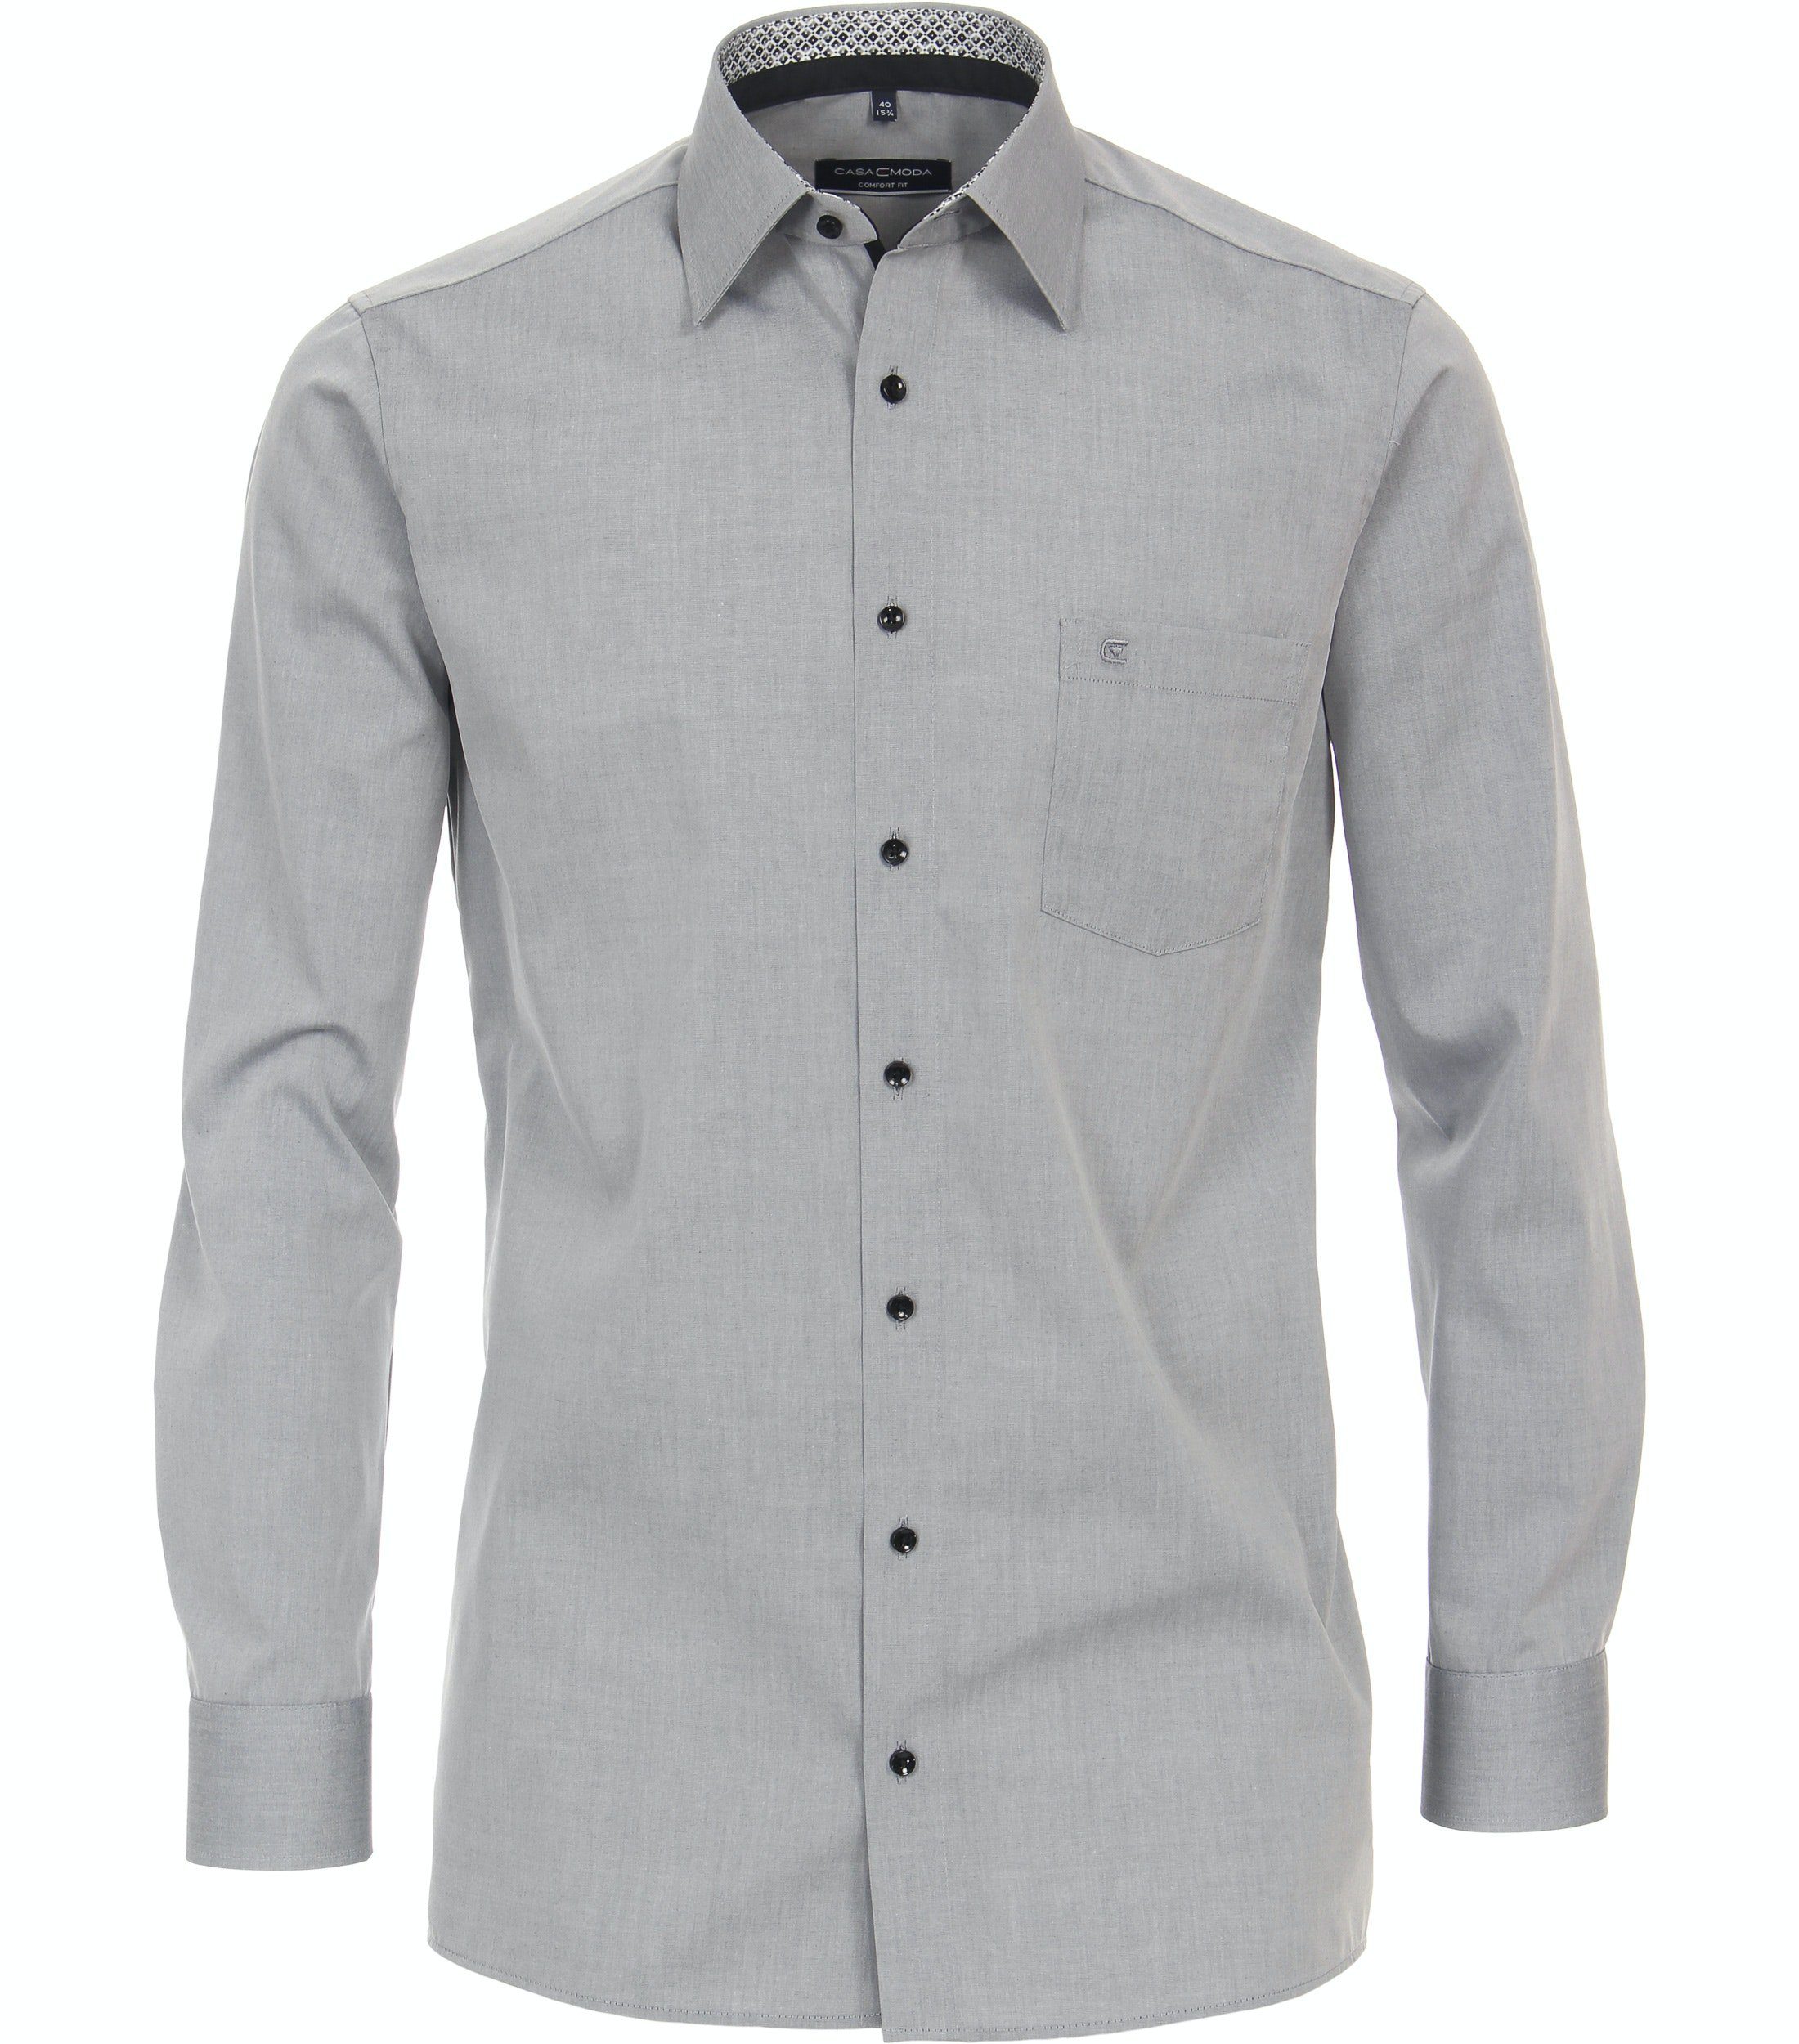 Langarm Silber Fit Comfort (705) CASAMODA - Grau Businesshemd - Einfarbig - - Businesshemd